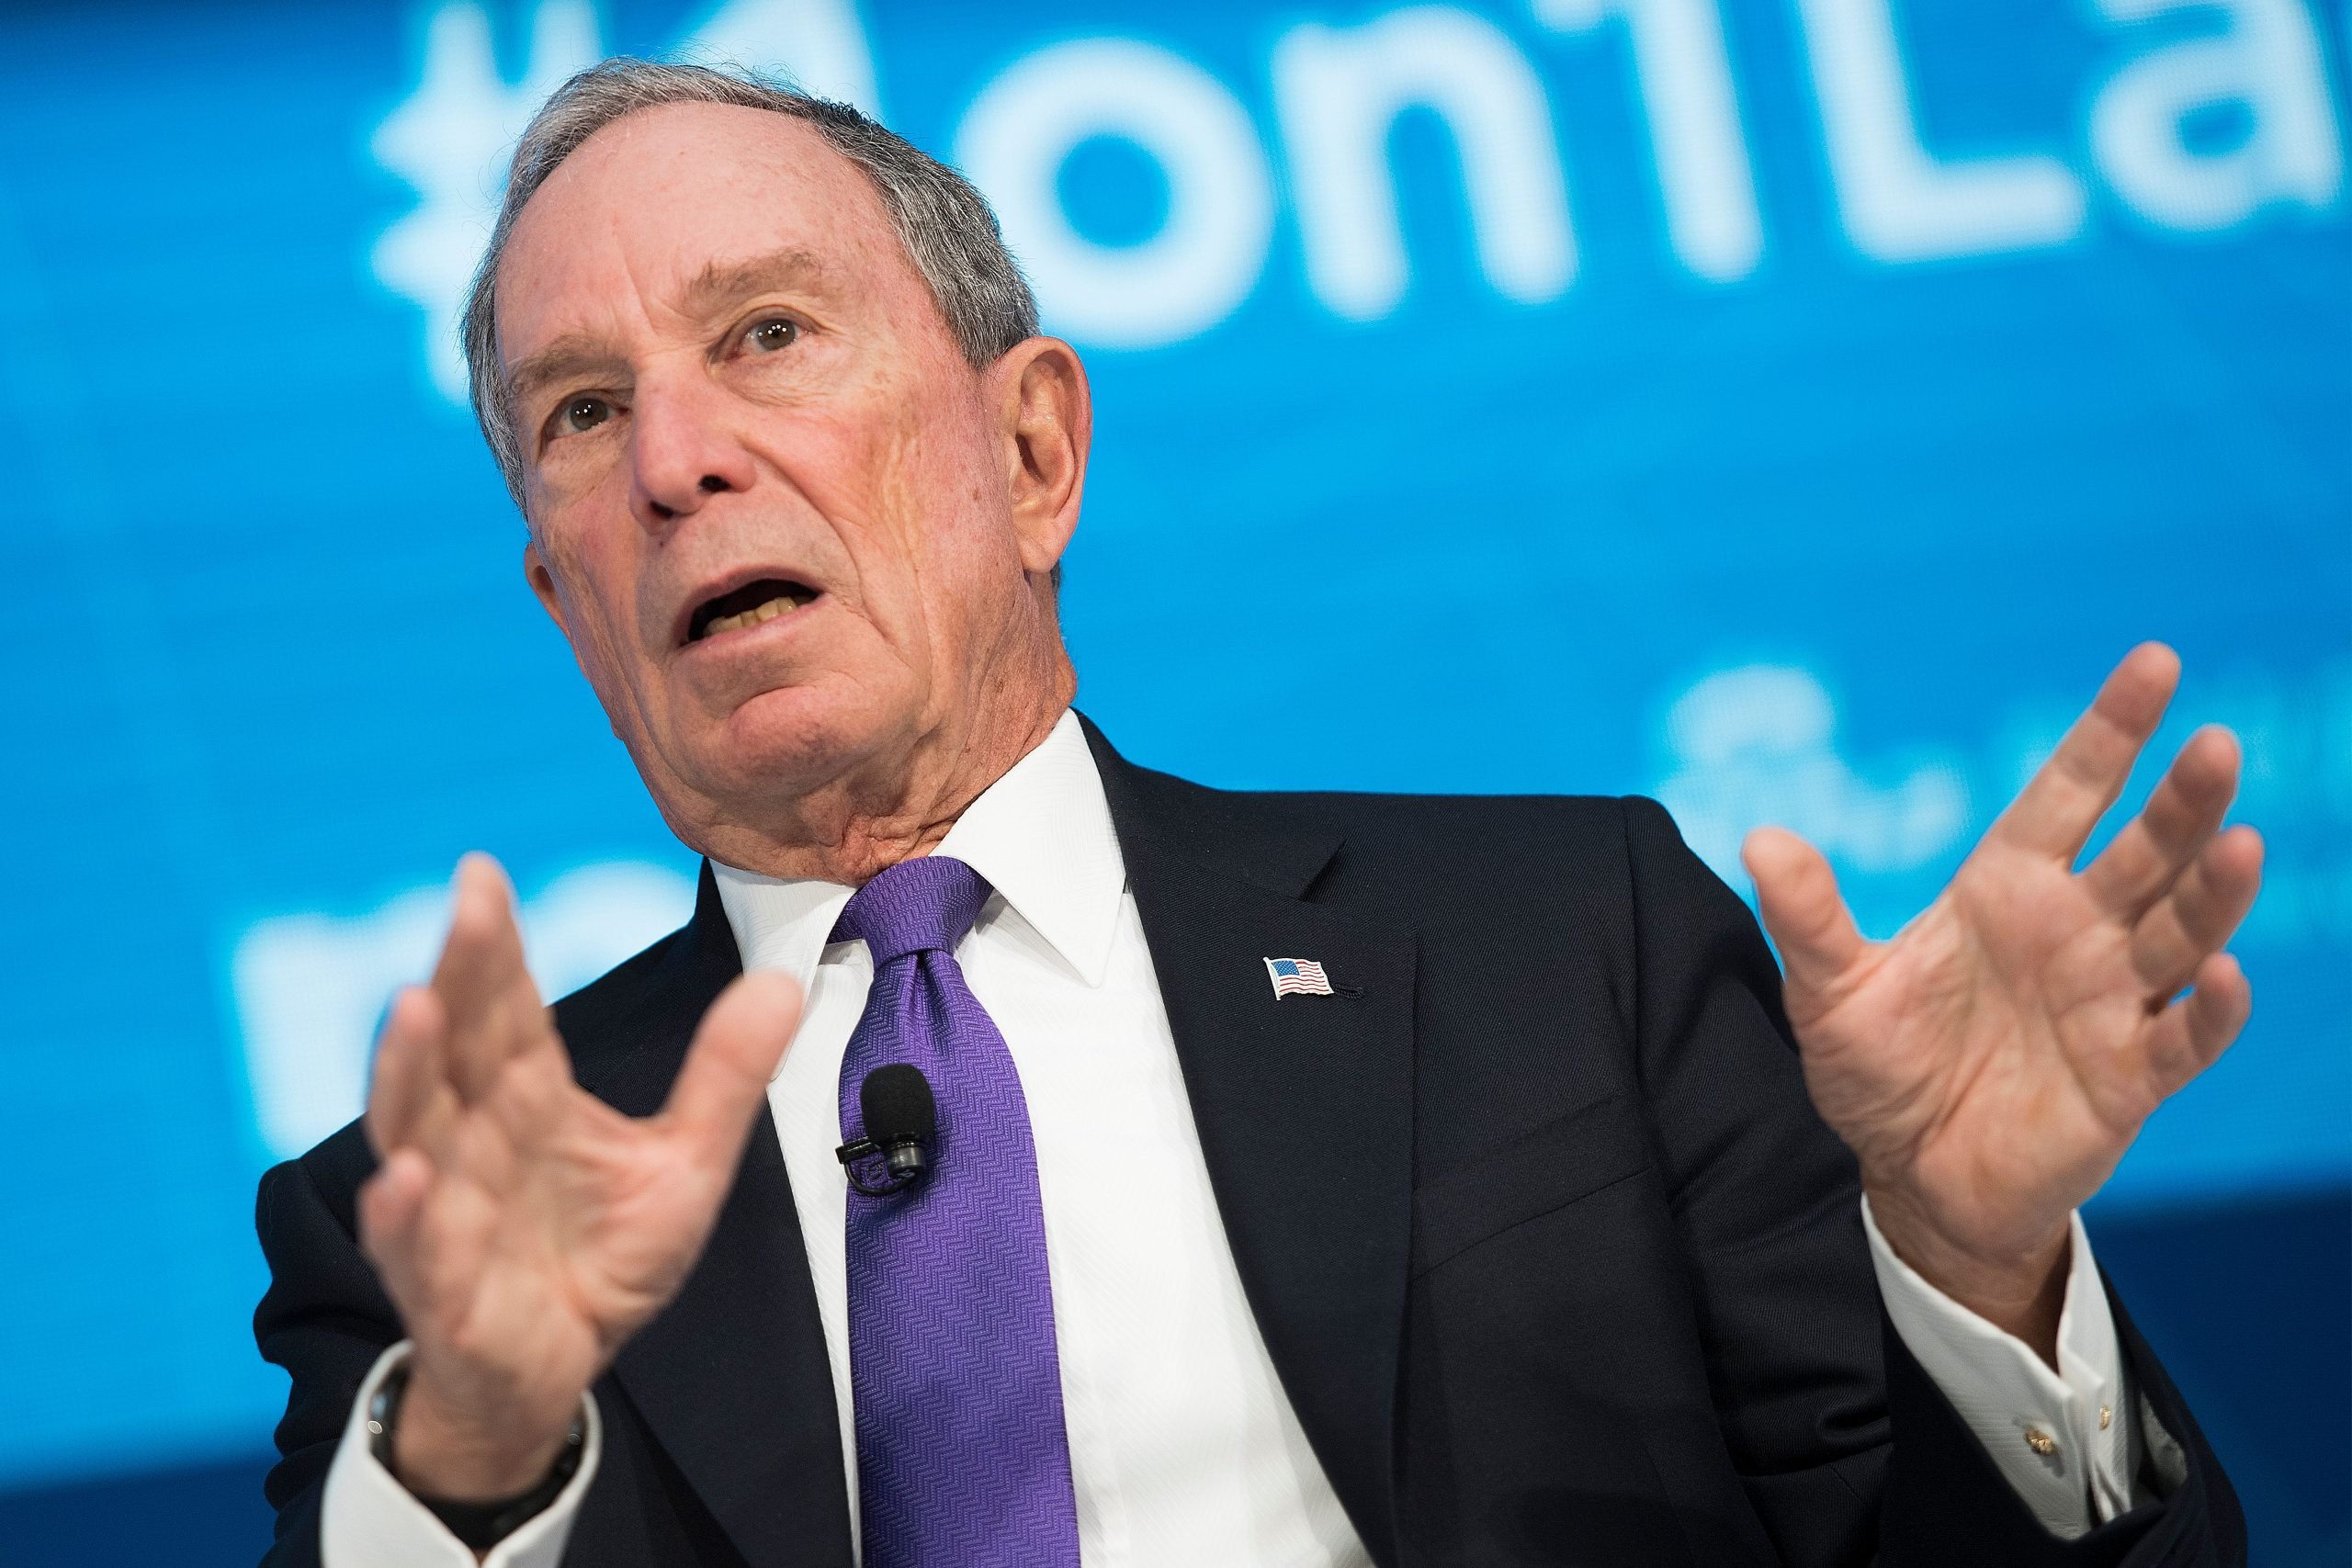 Michael Bloombergs Presidential Run Faces First Amendment Litmus Test ...